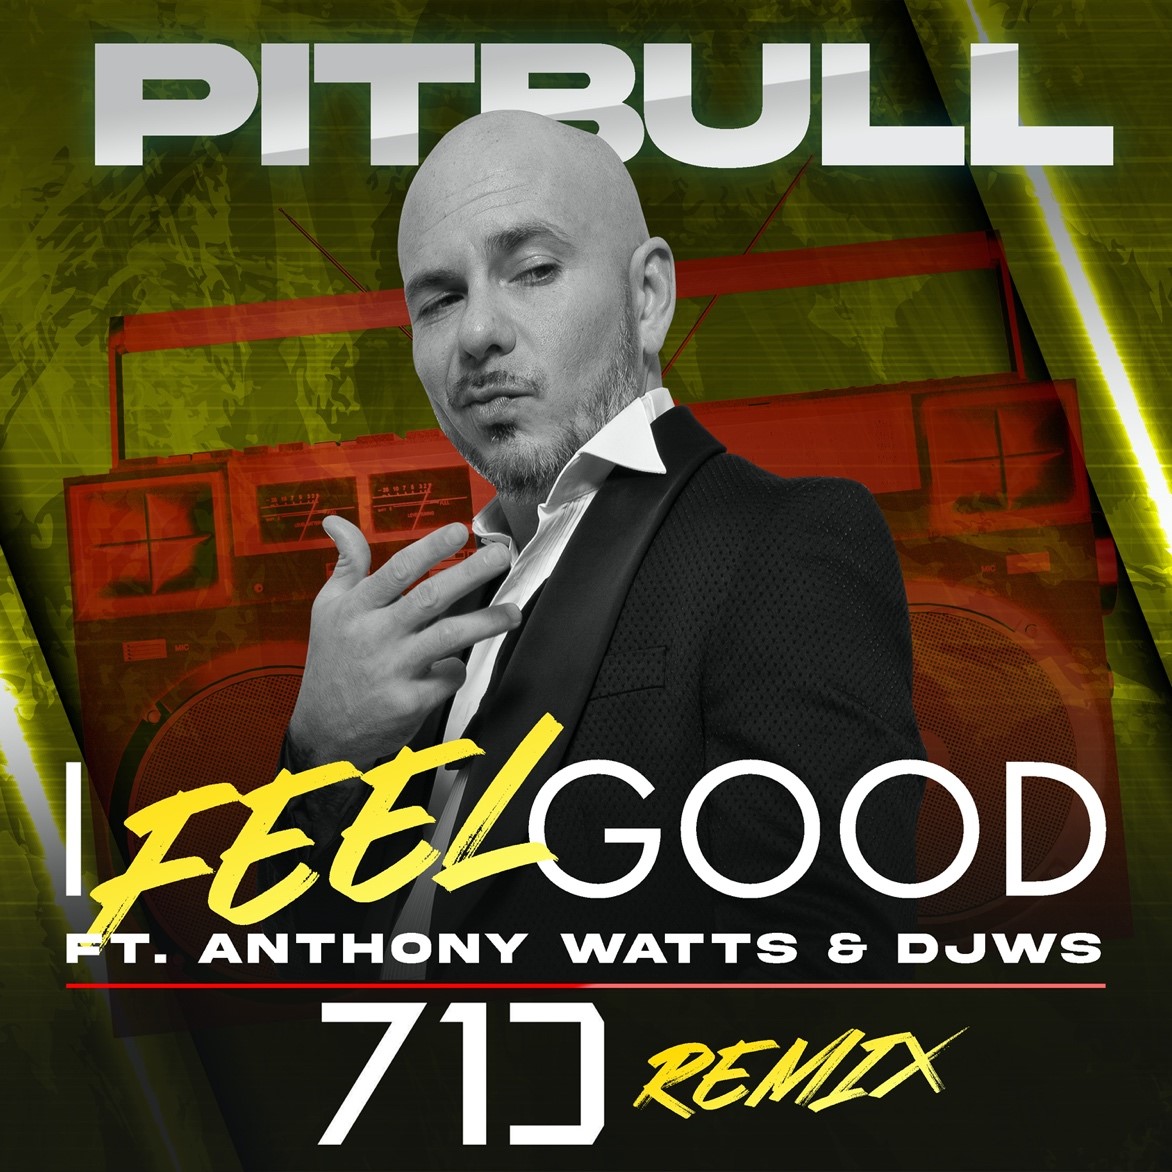 pitbull i feel good 71